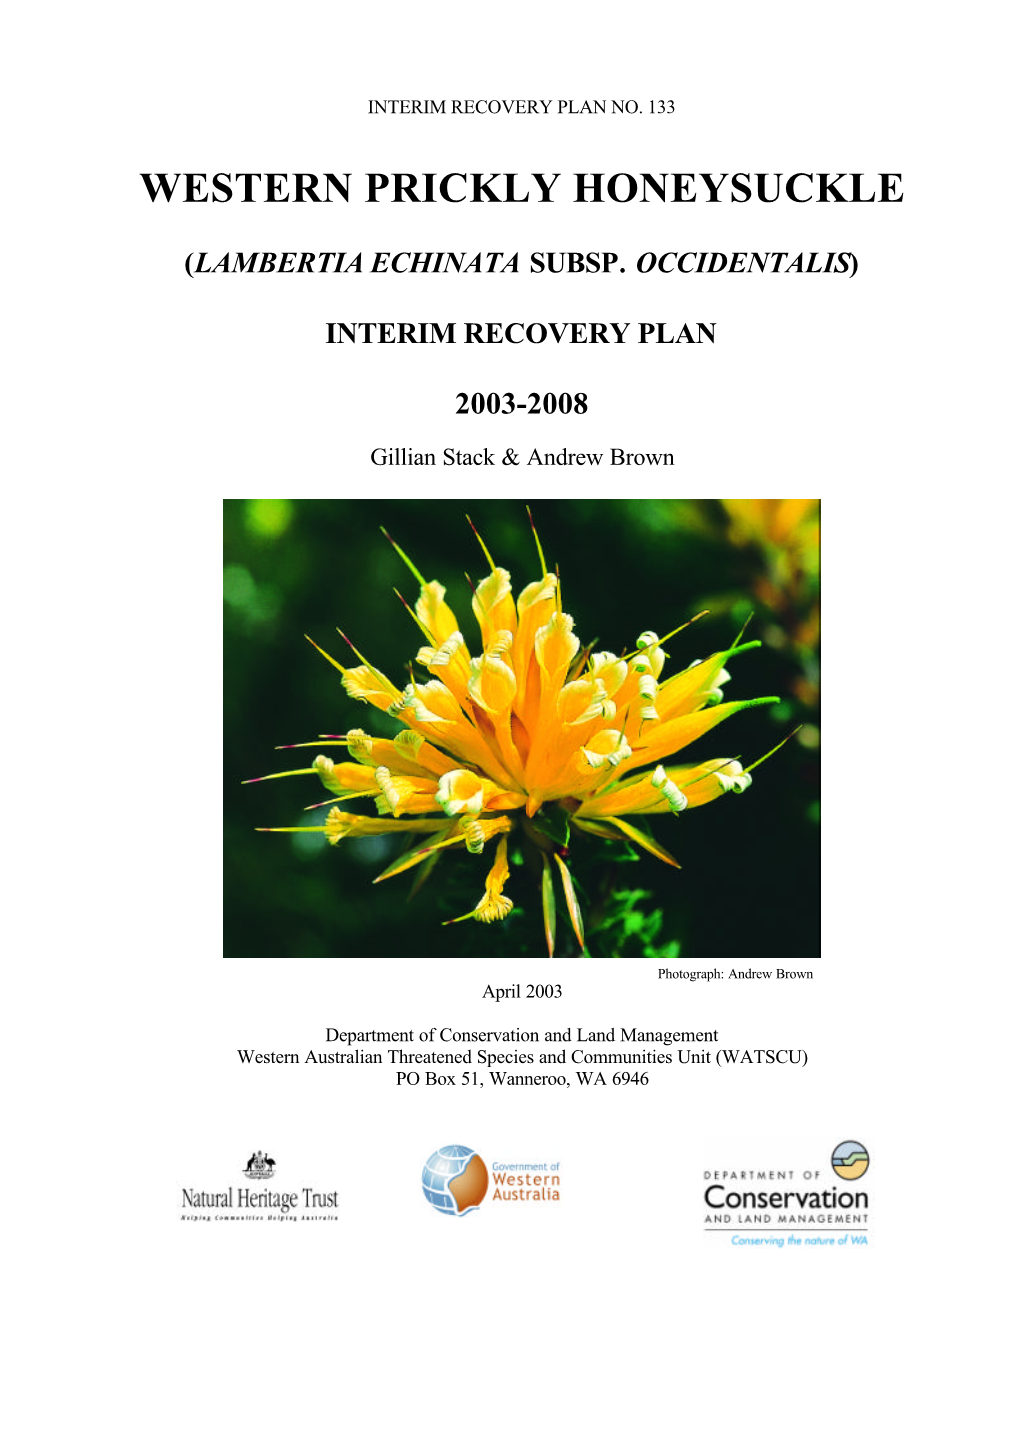 (Lamberta Echinata Subsp. Occidentalis) Interim Recovery Plan